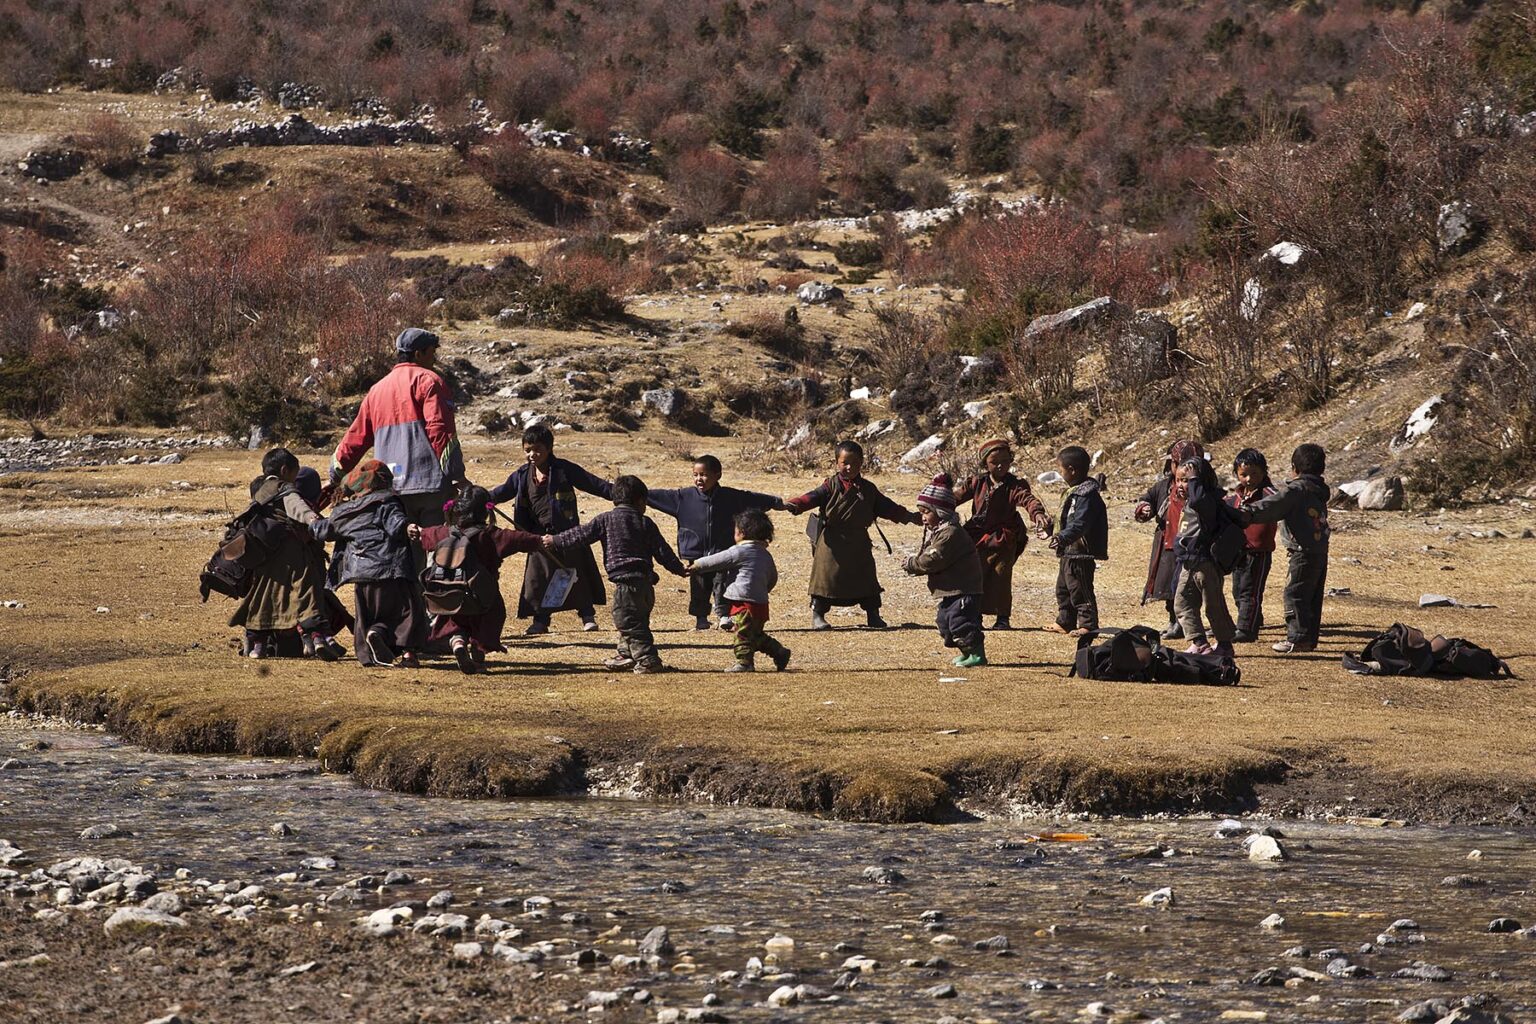 SCHOOL CHILDREN at play in the village of SAMAGAUN on the AROUND MANASLU TREK - NUPRI REGION, NEPAL